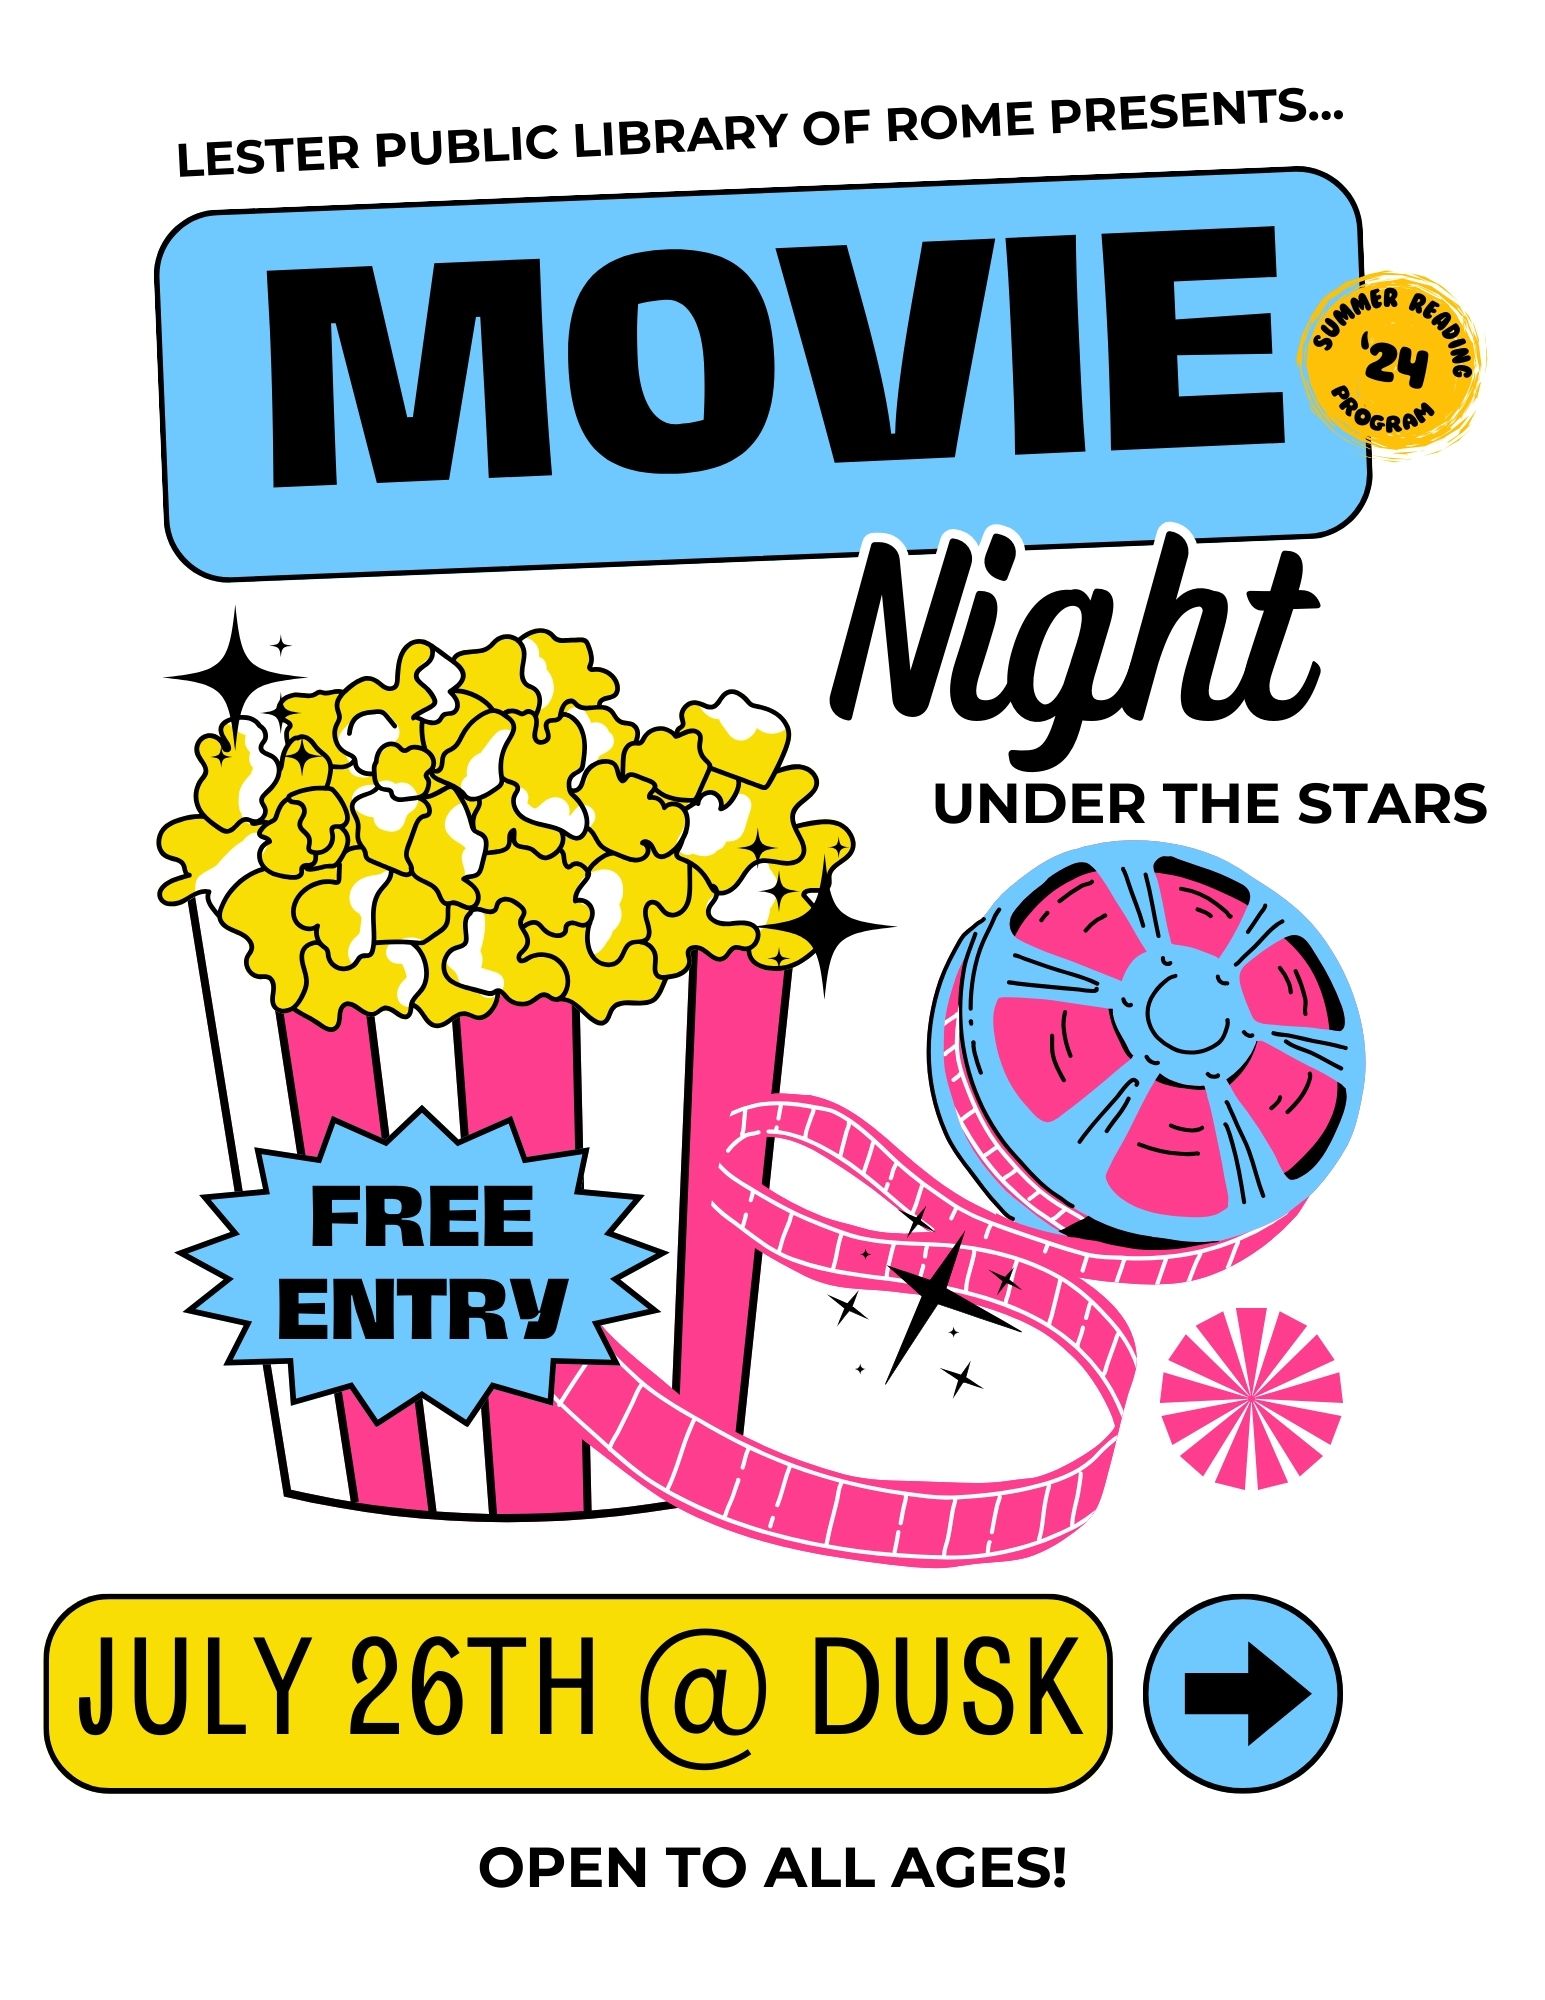 Movie Night Under The Stars July 26th at Dusk